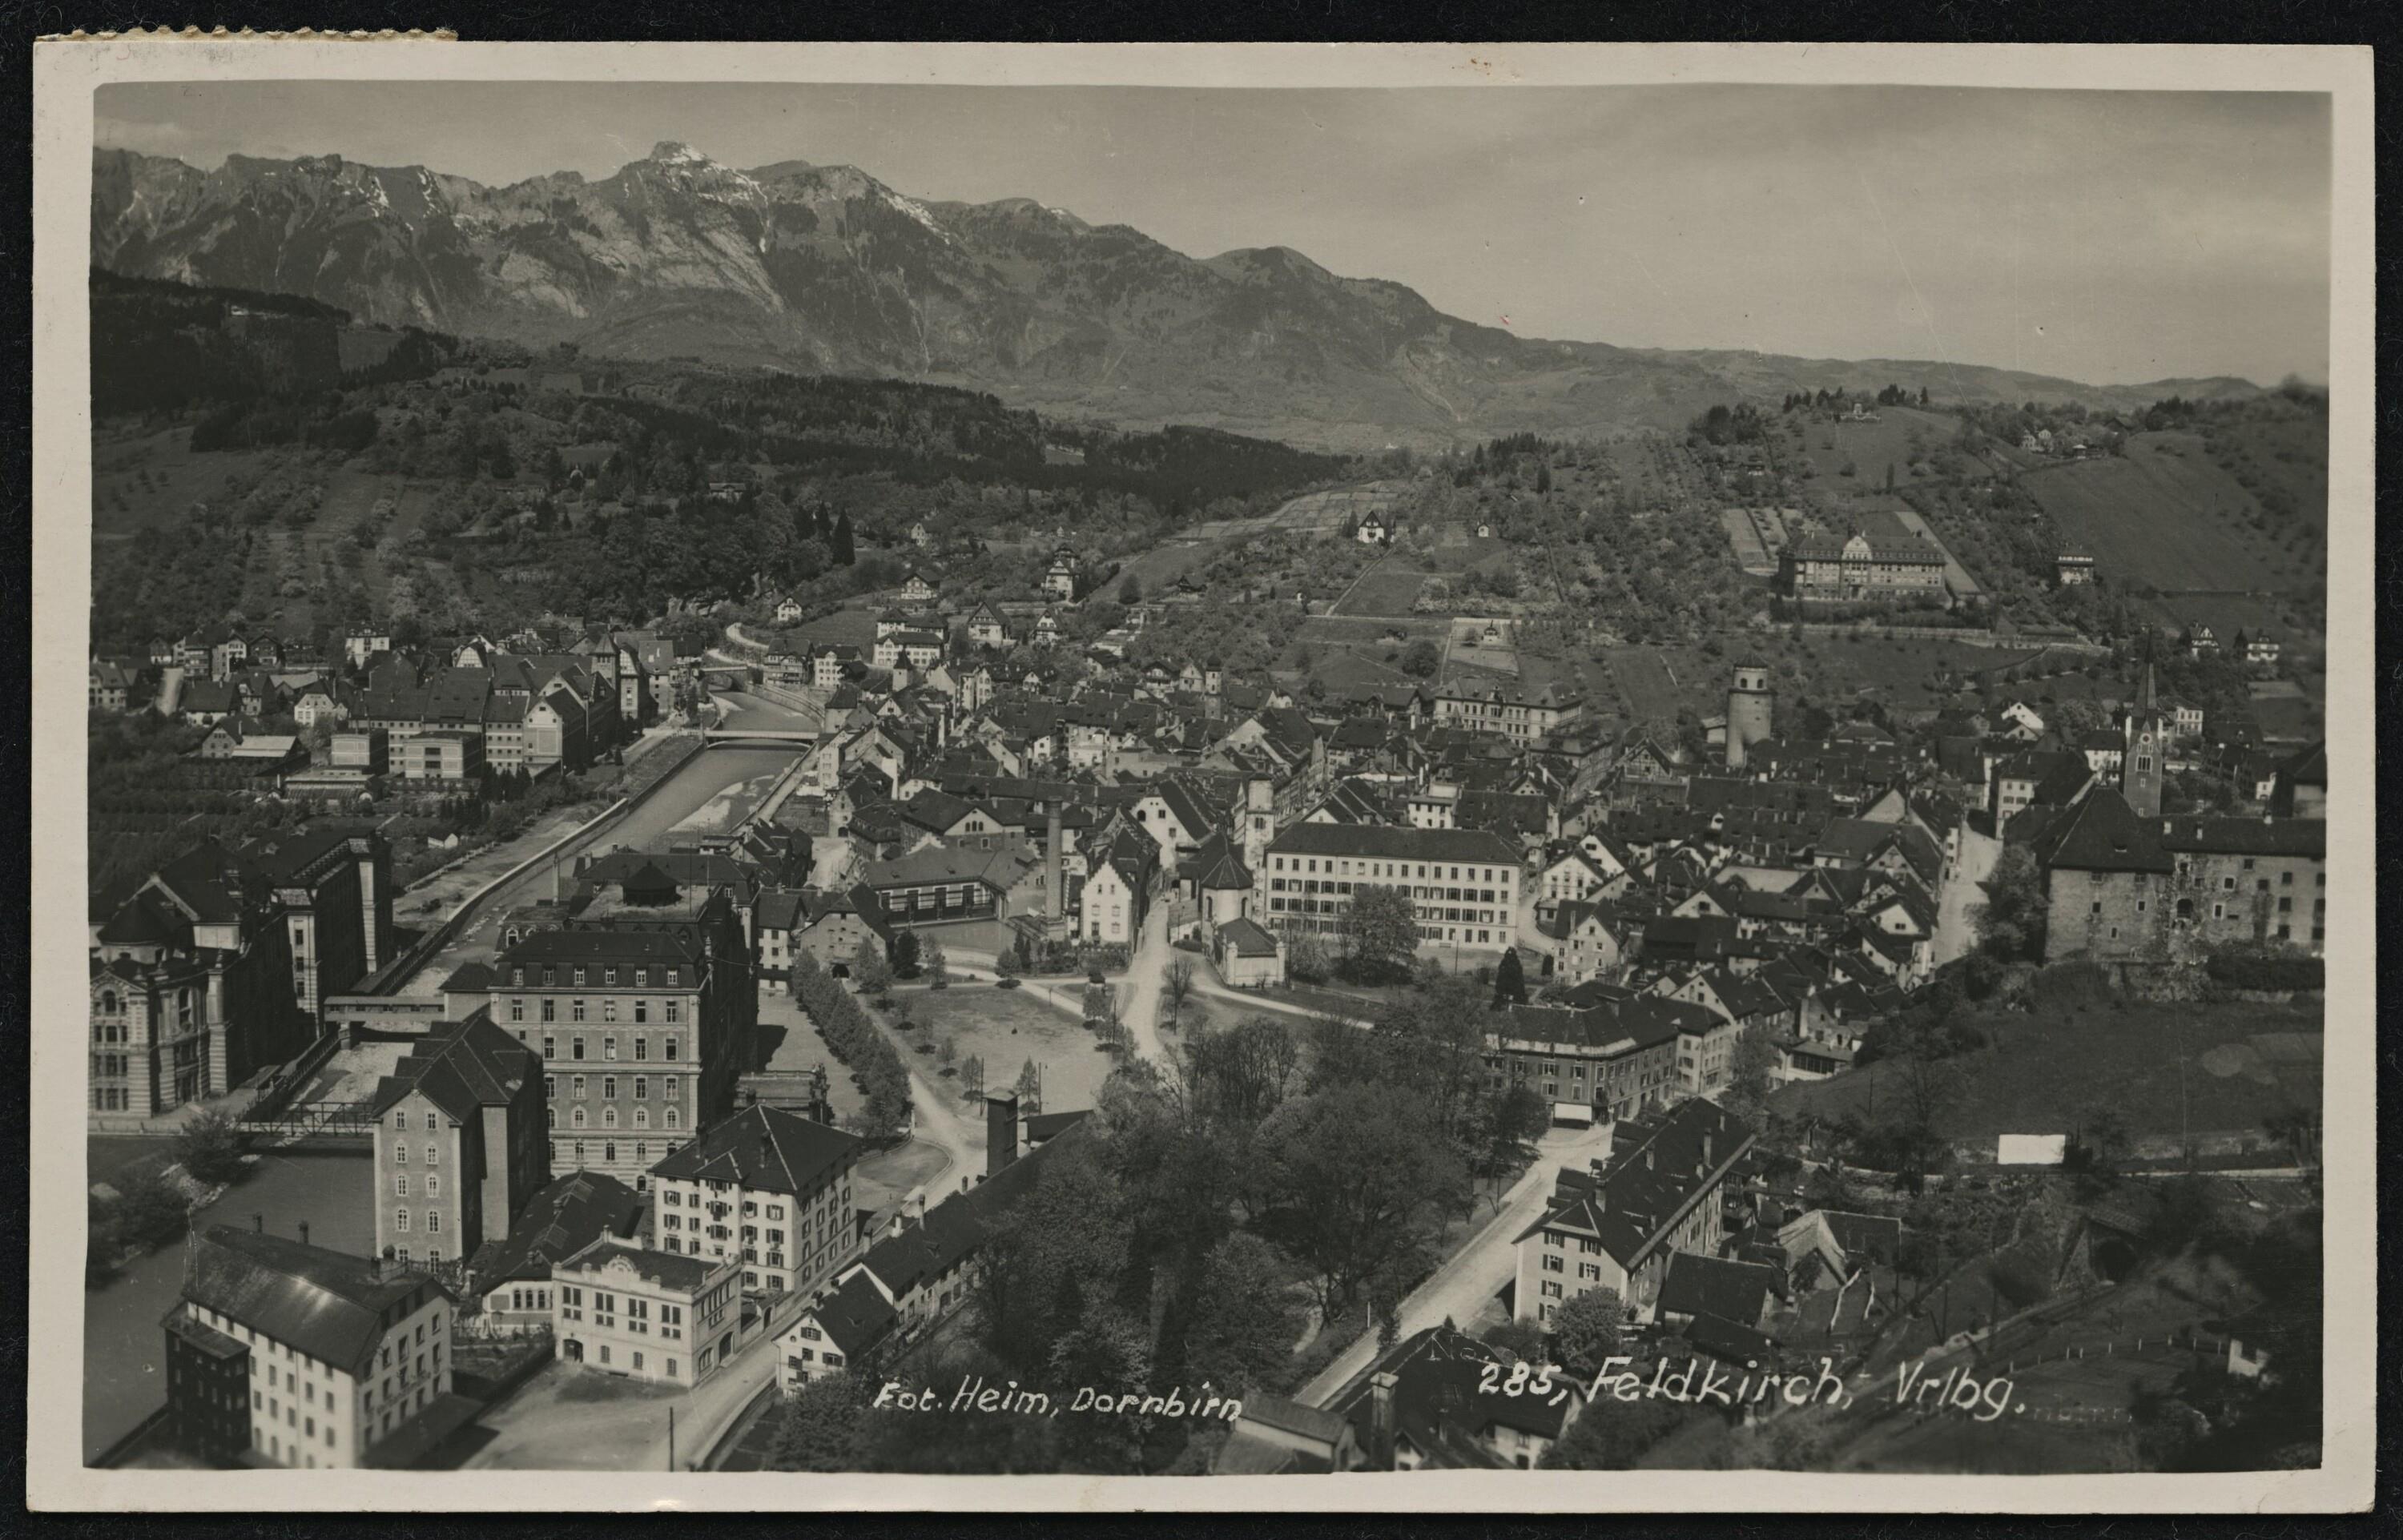 Feldkirch, Vrlbg.></div>


    <hr>
    <div class=